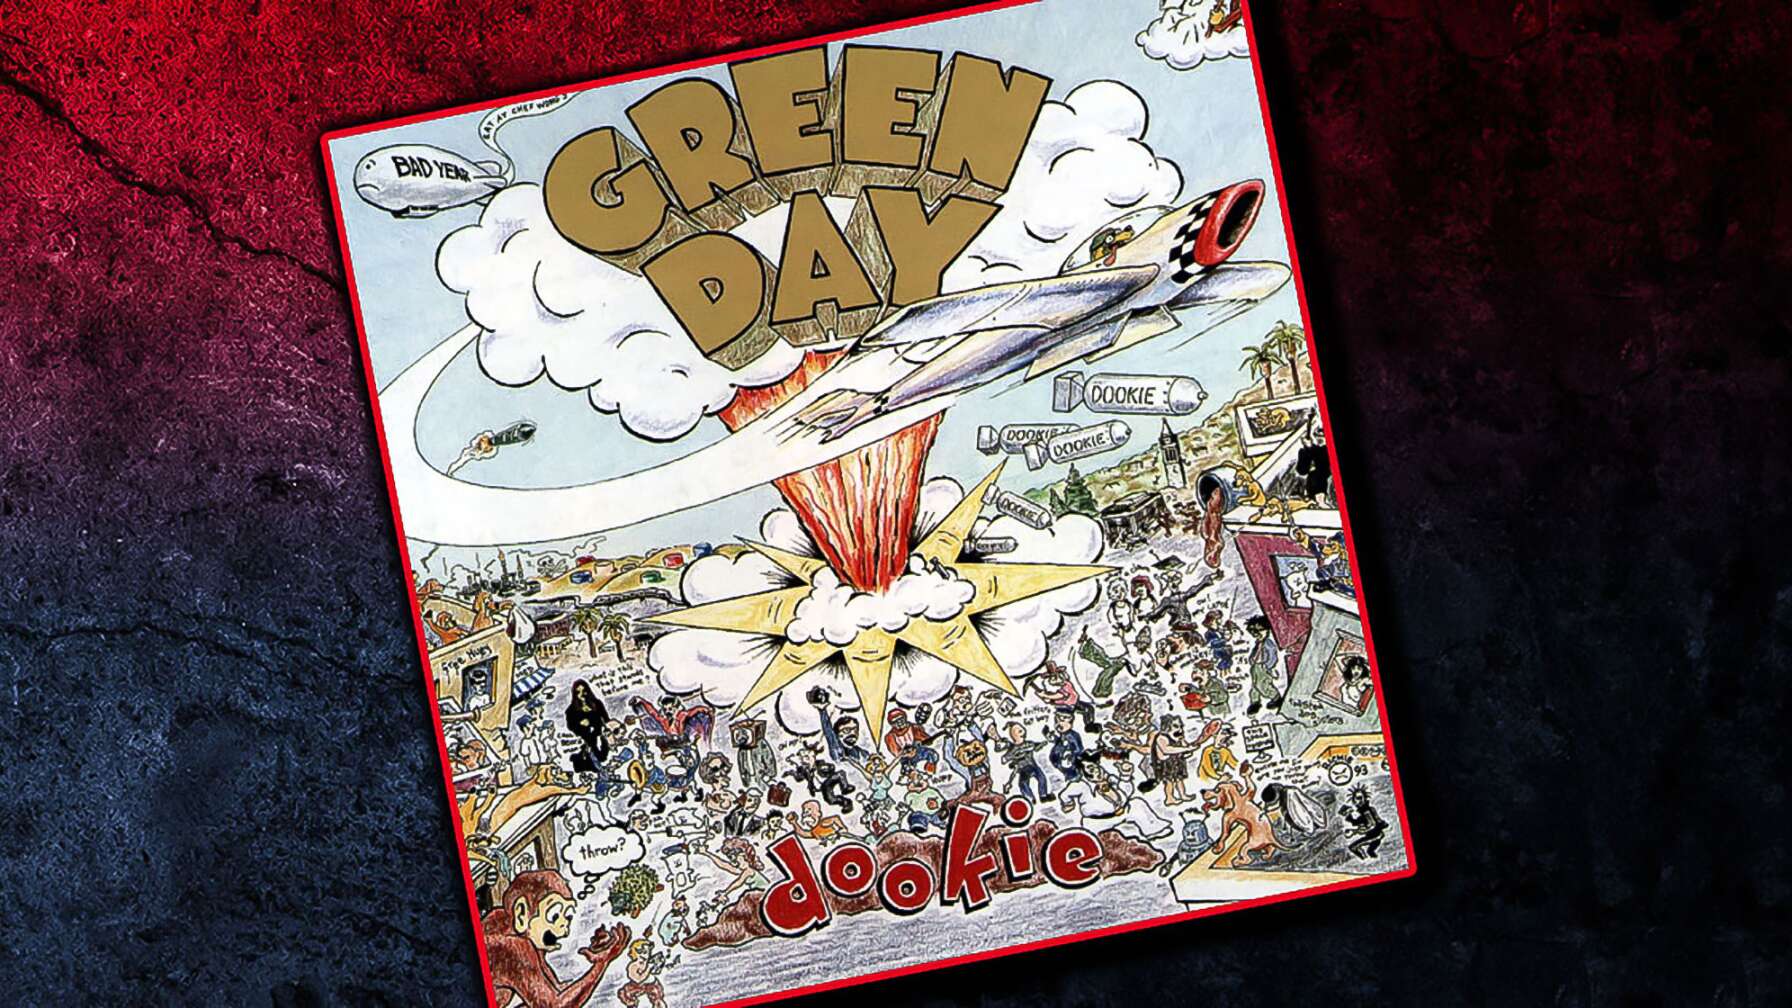 Das Albumcover des Green Day-Albums "Dookie"